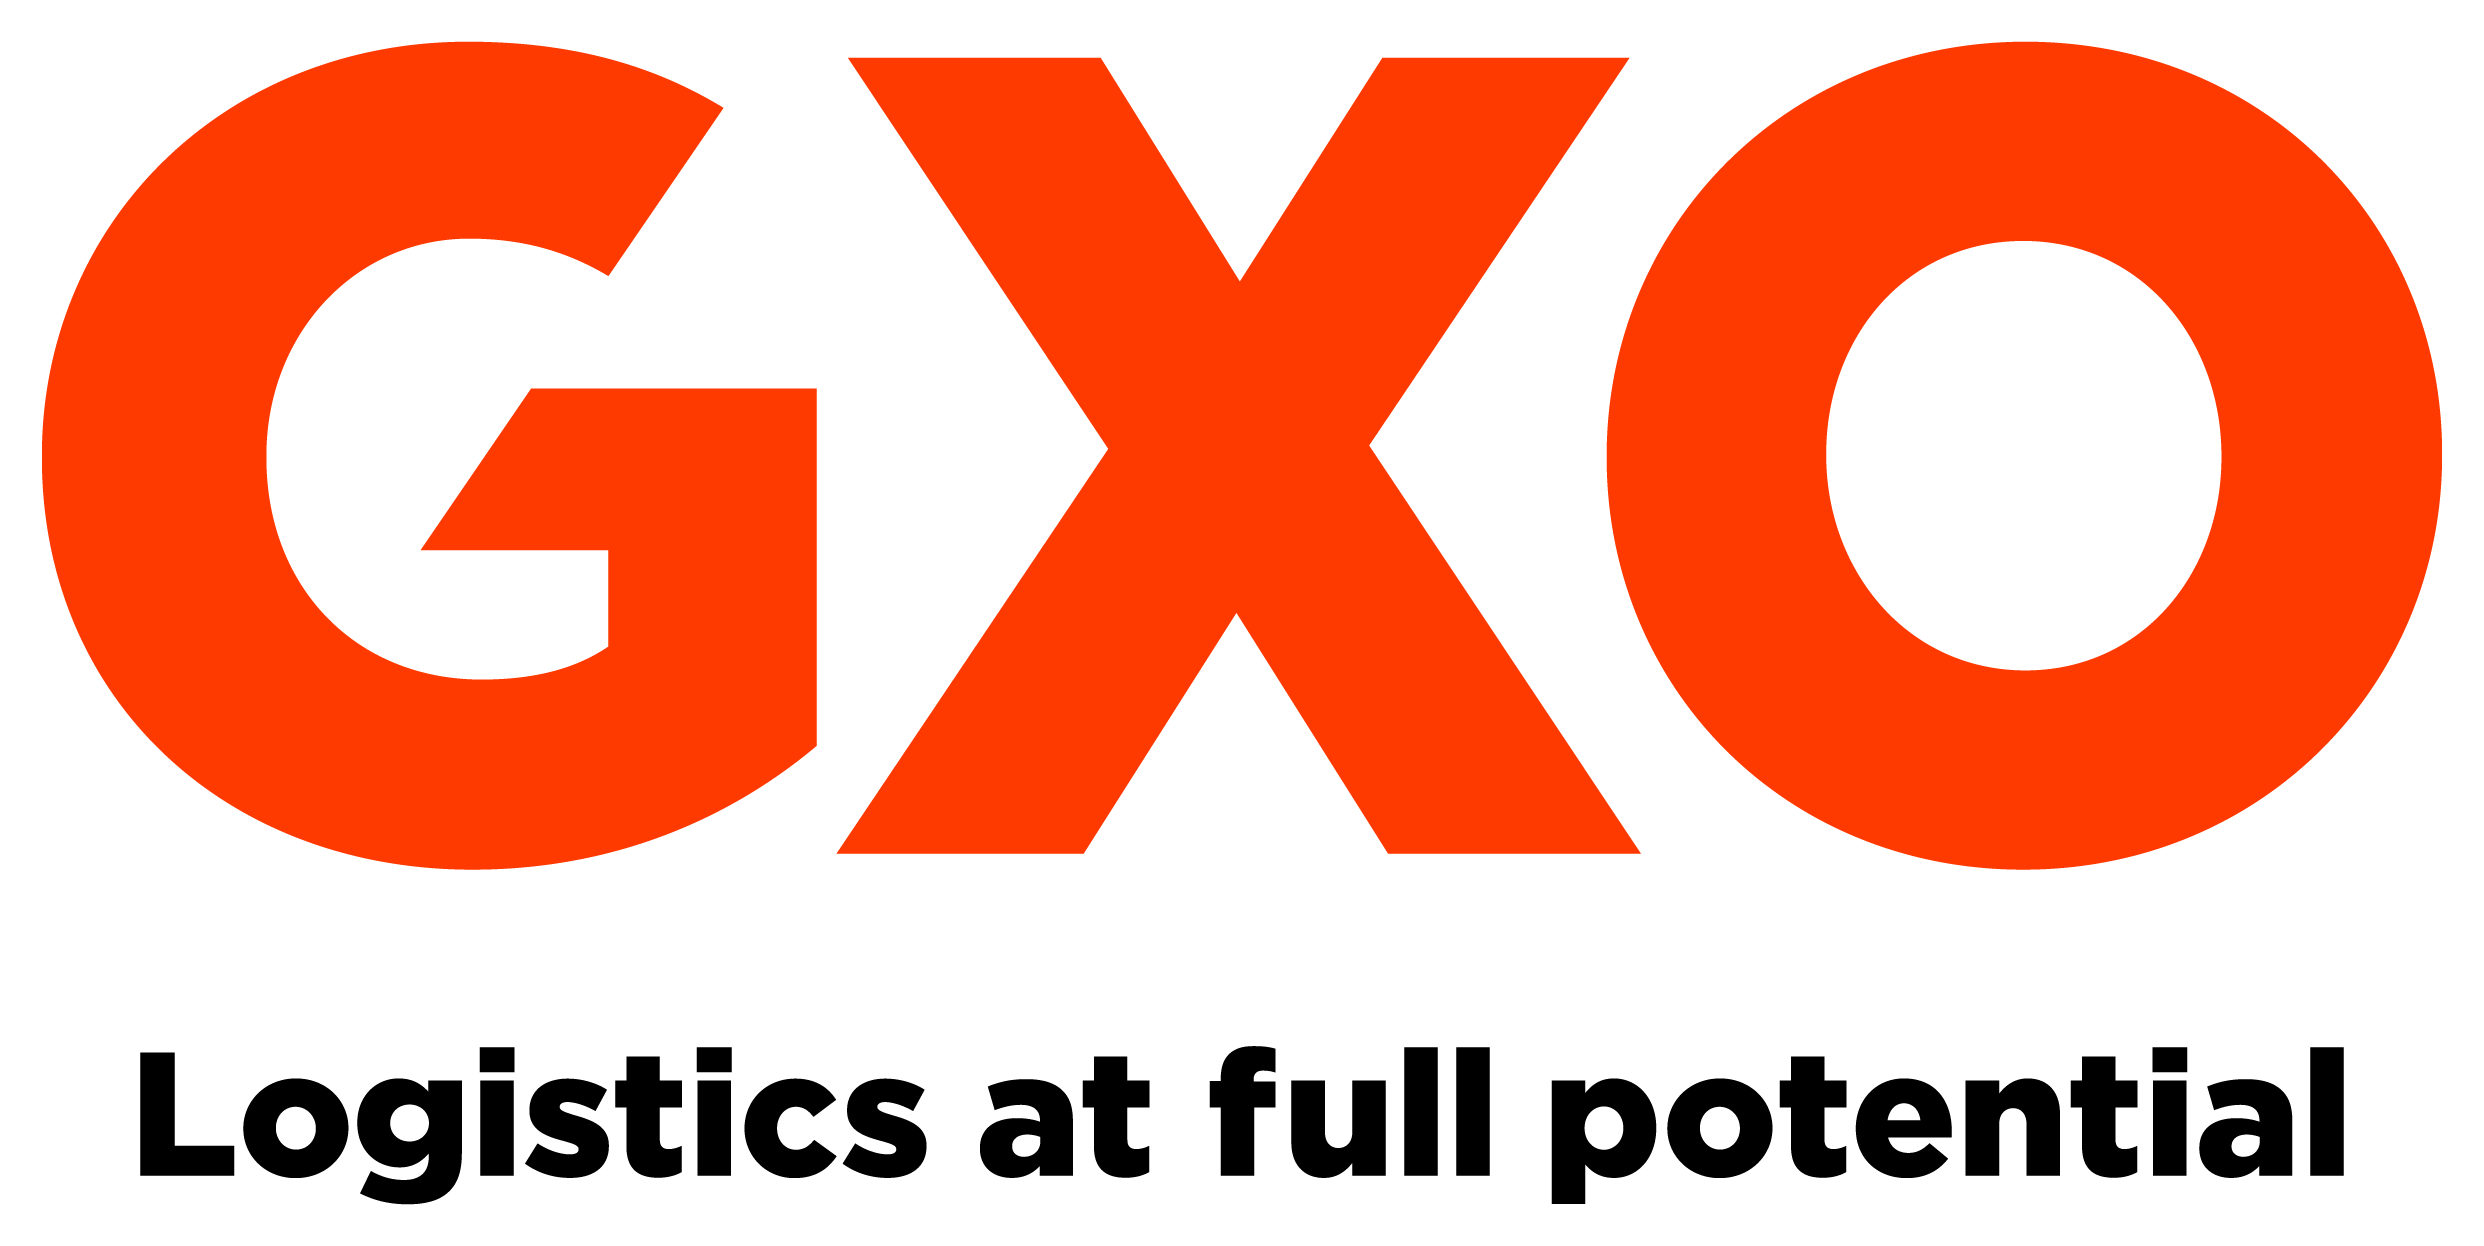 Sigla GXO cu slogan